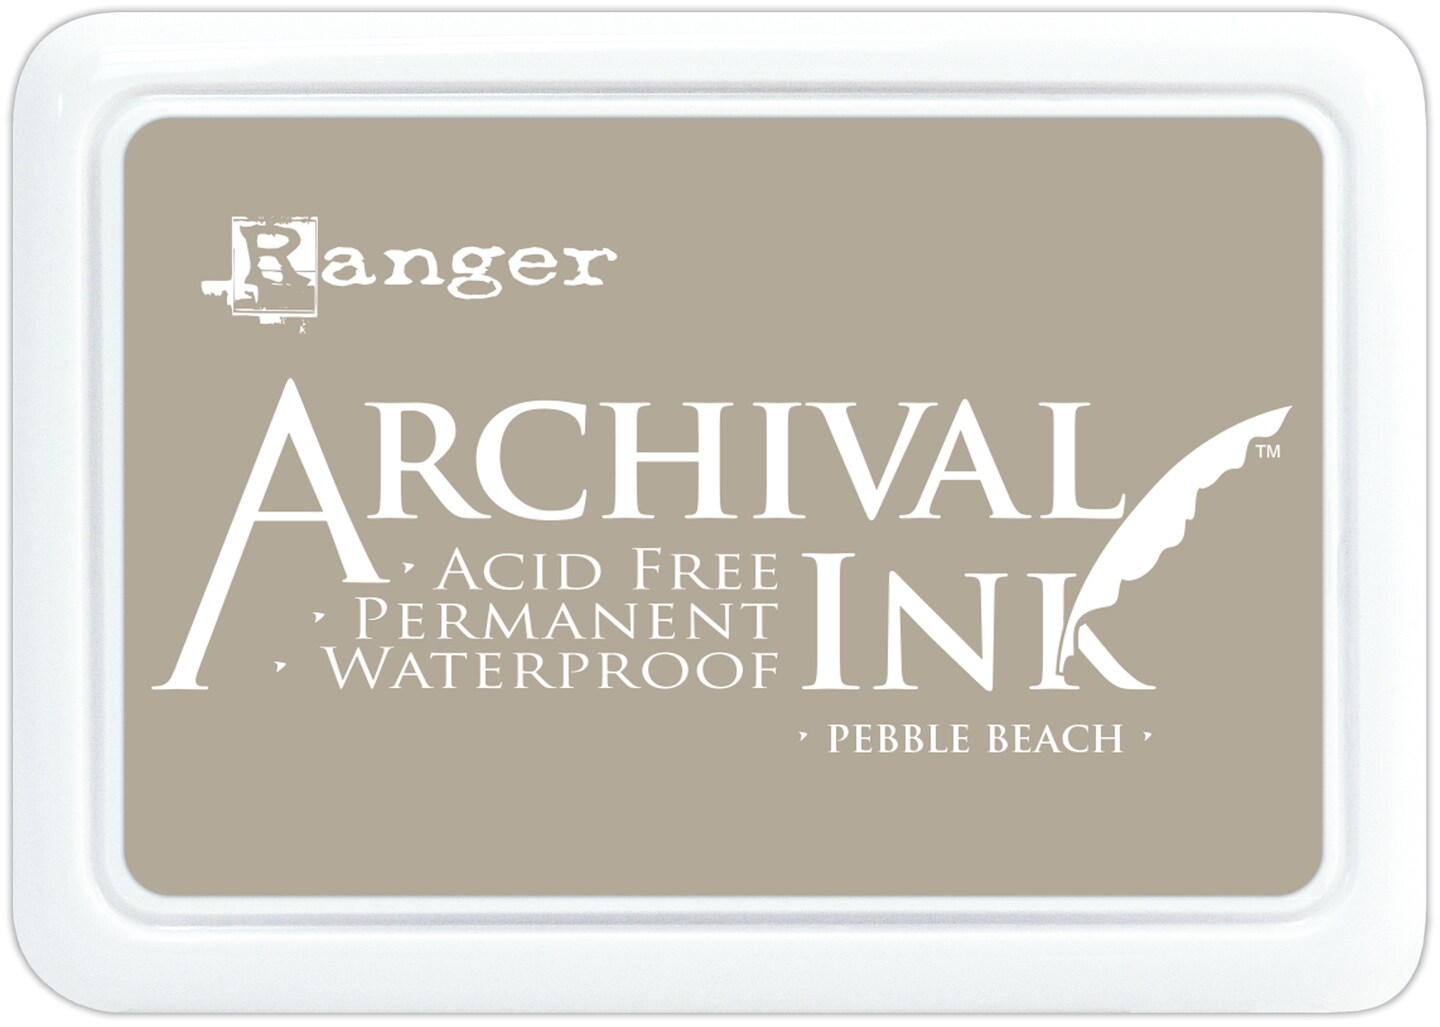 Sea Grass Archival Ink Pad #0 - Ranger